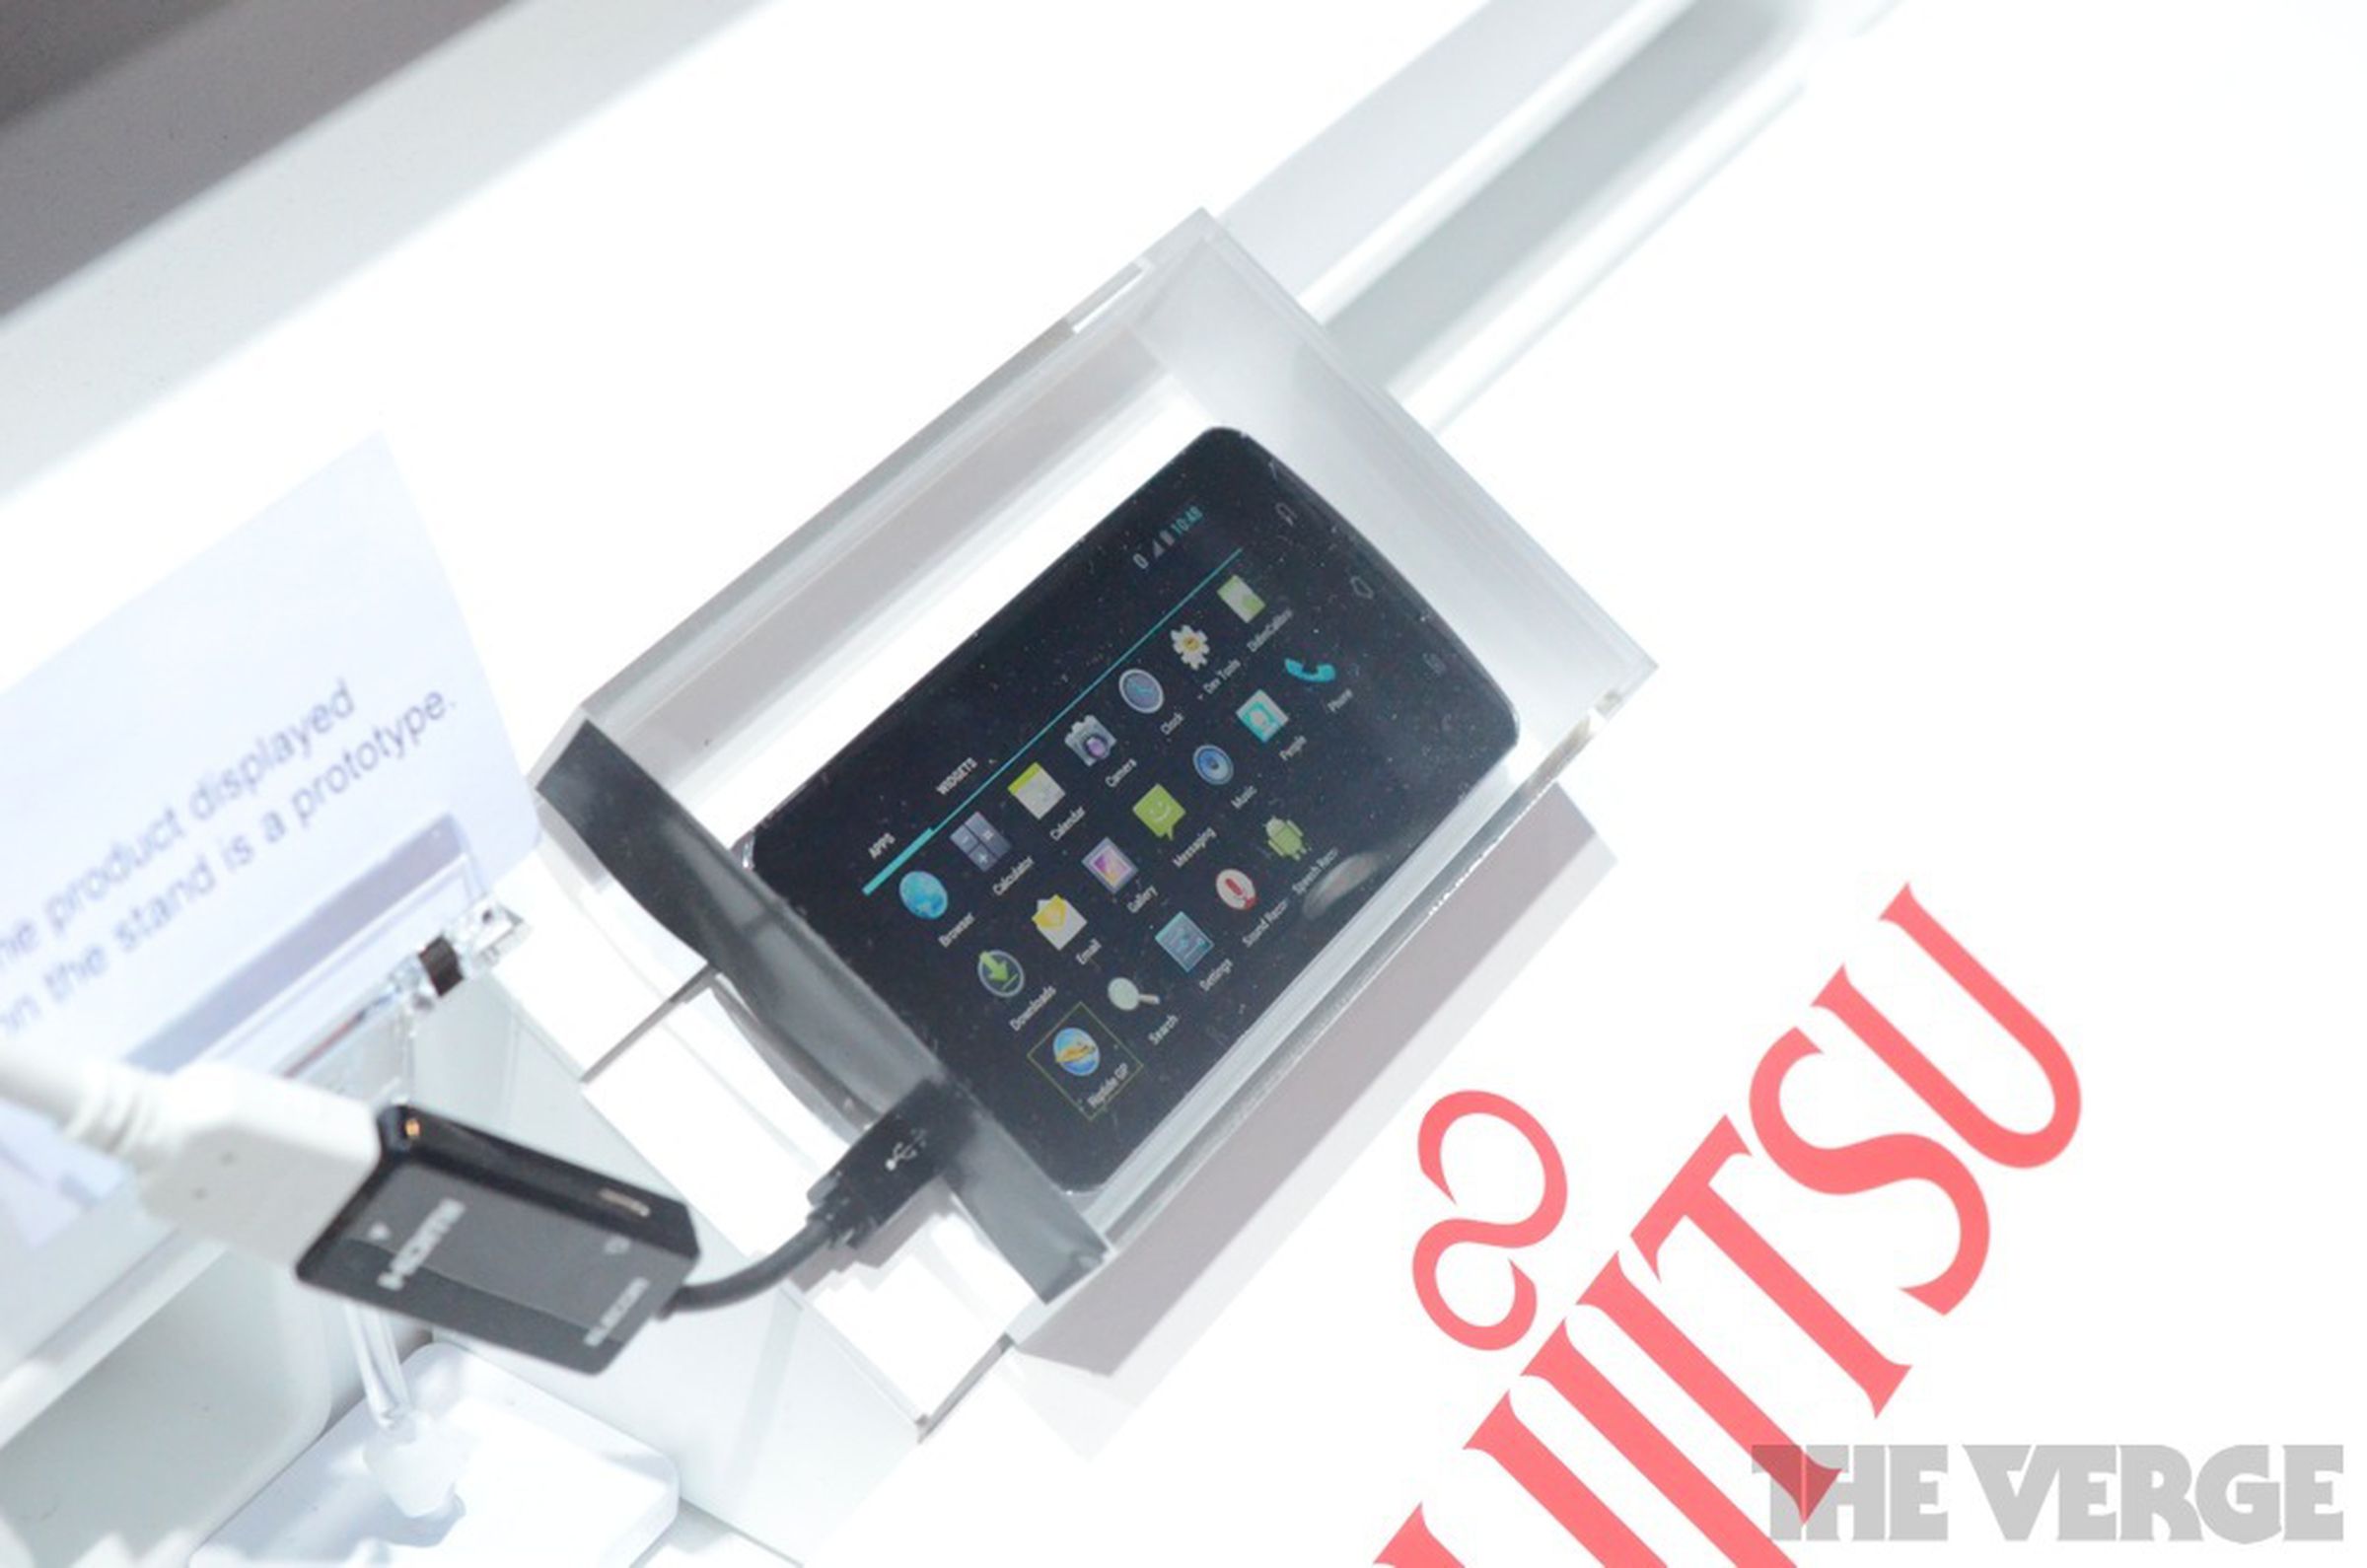 Fujitsu shows off first Tegra 3 phone